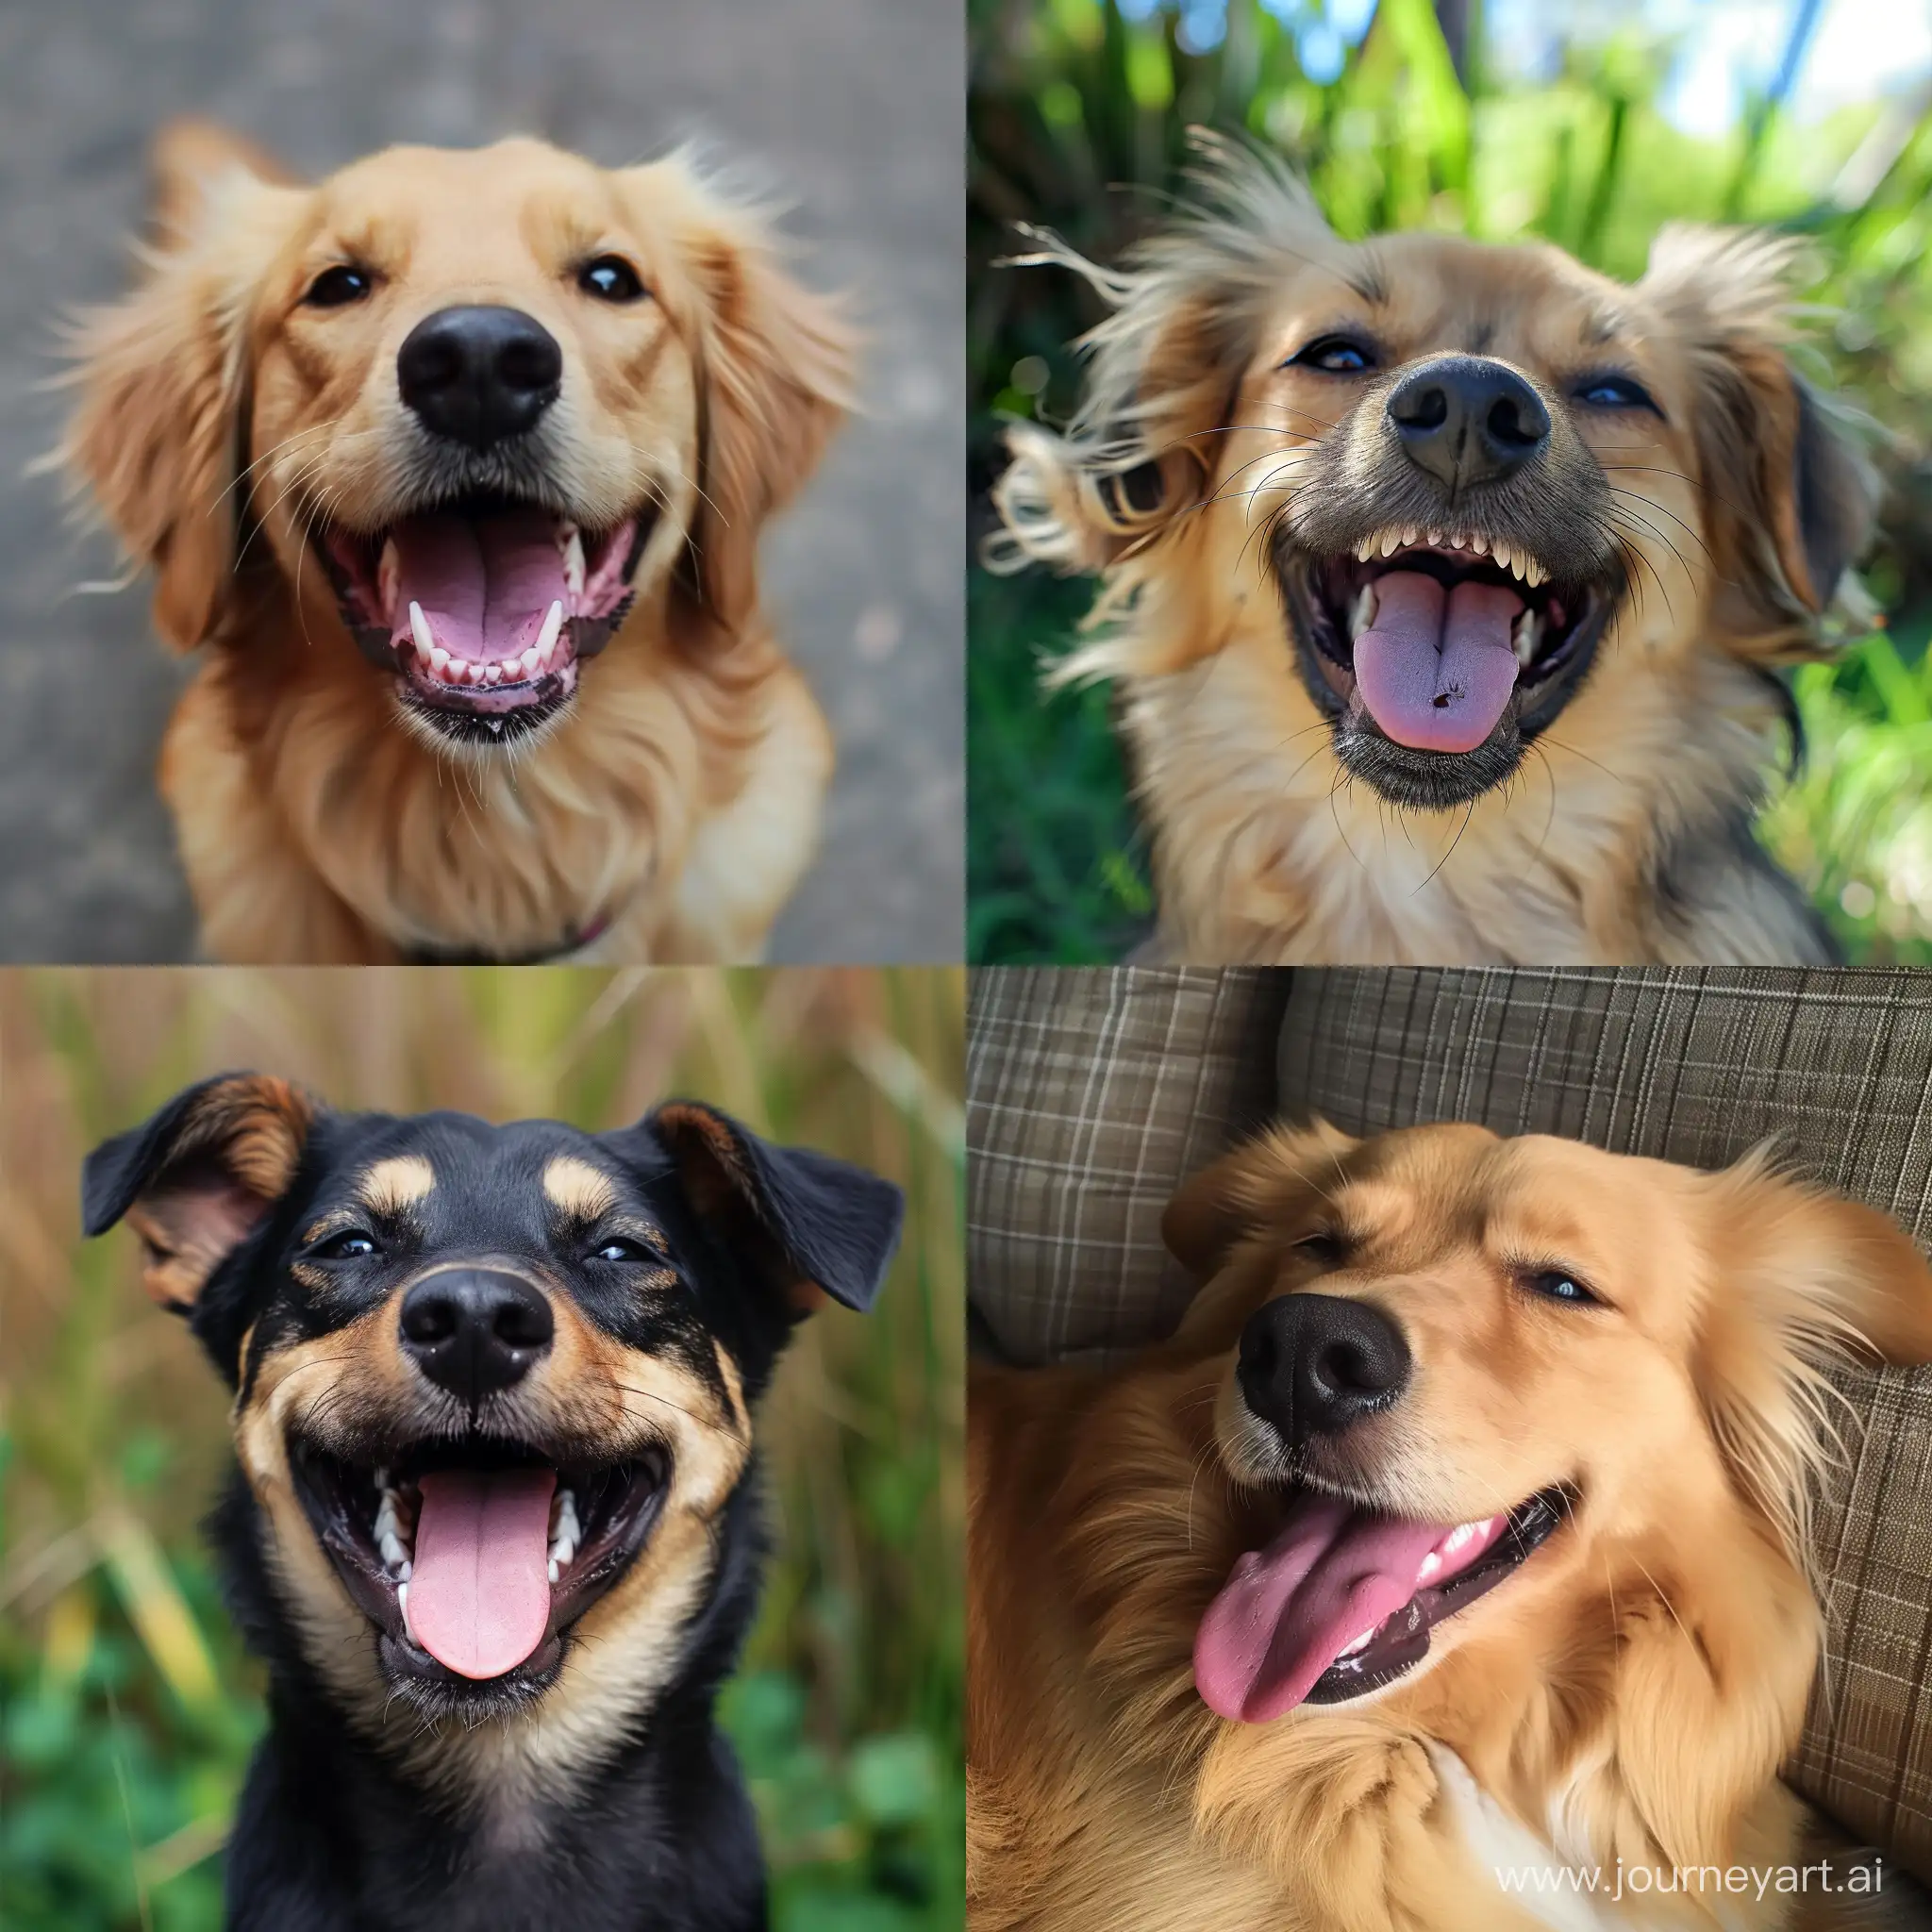 Joyful-Canine-Delight-Cheerful-Dog-Captured-in-Vibrant-Imagery